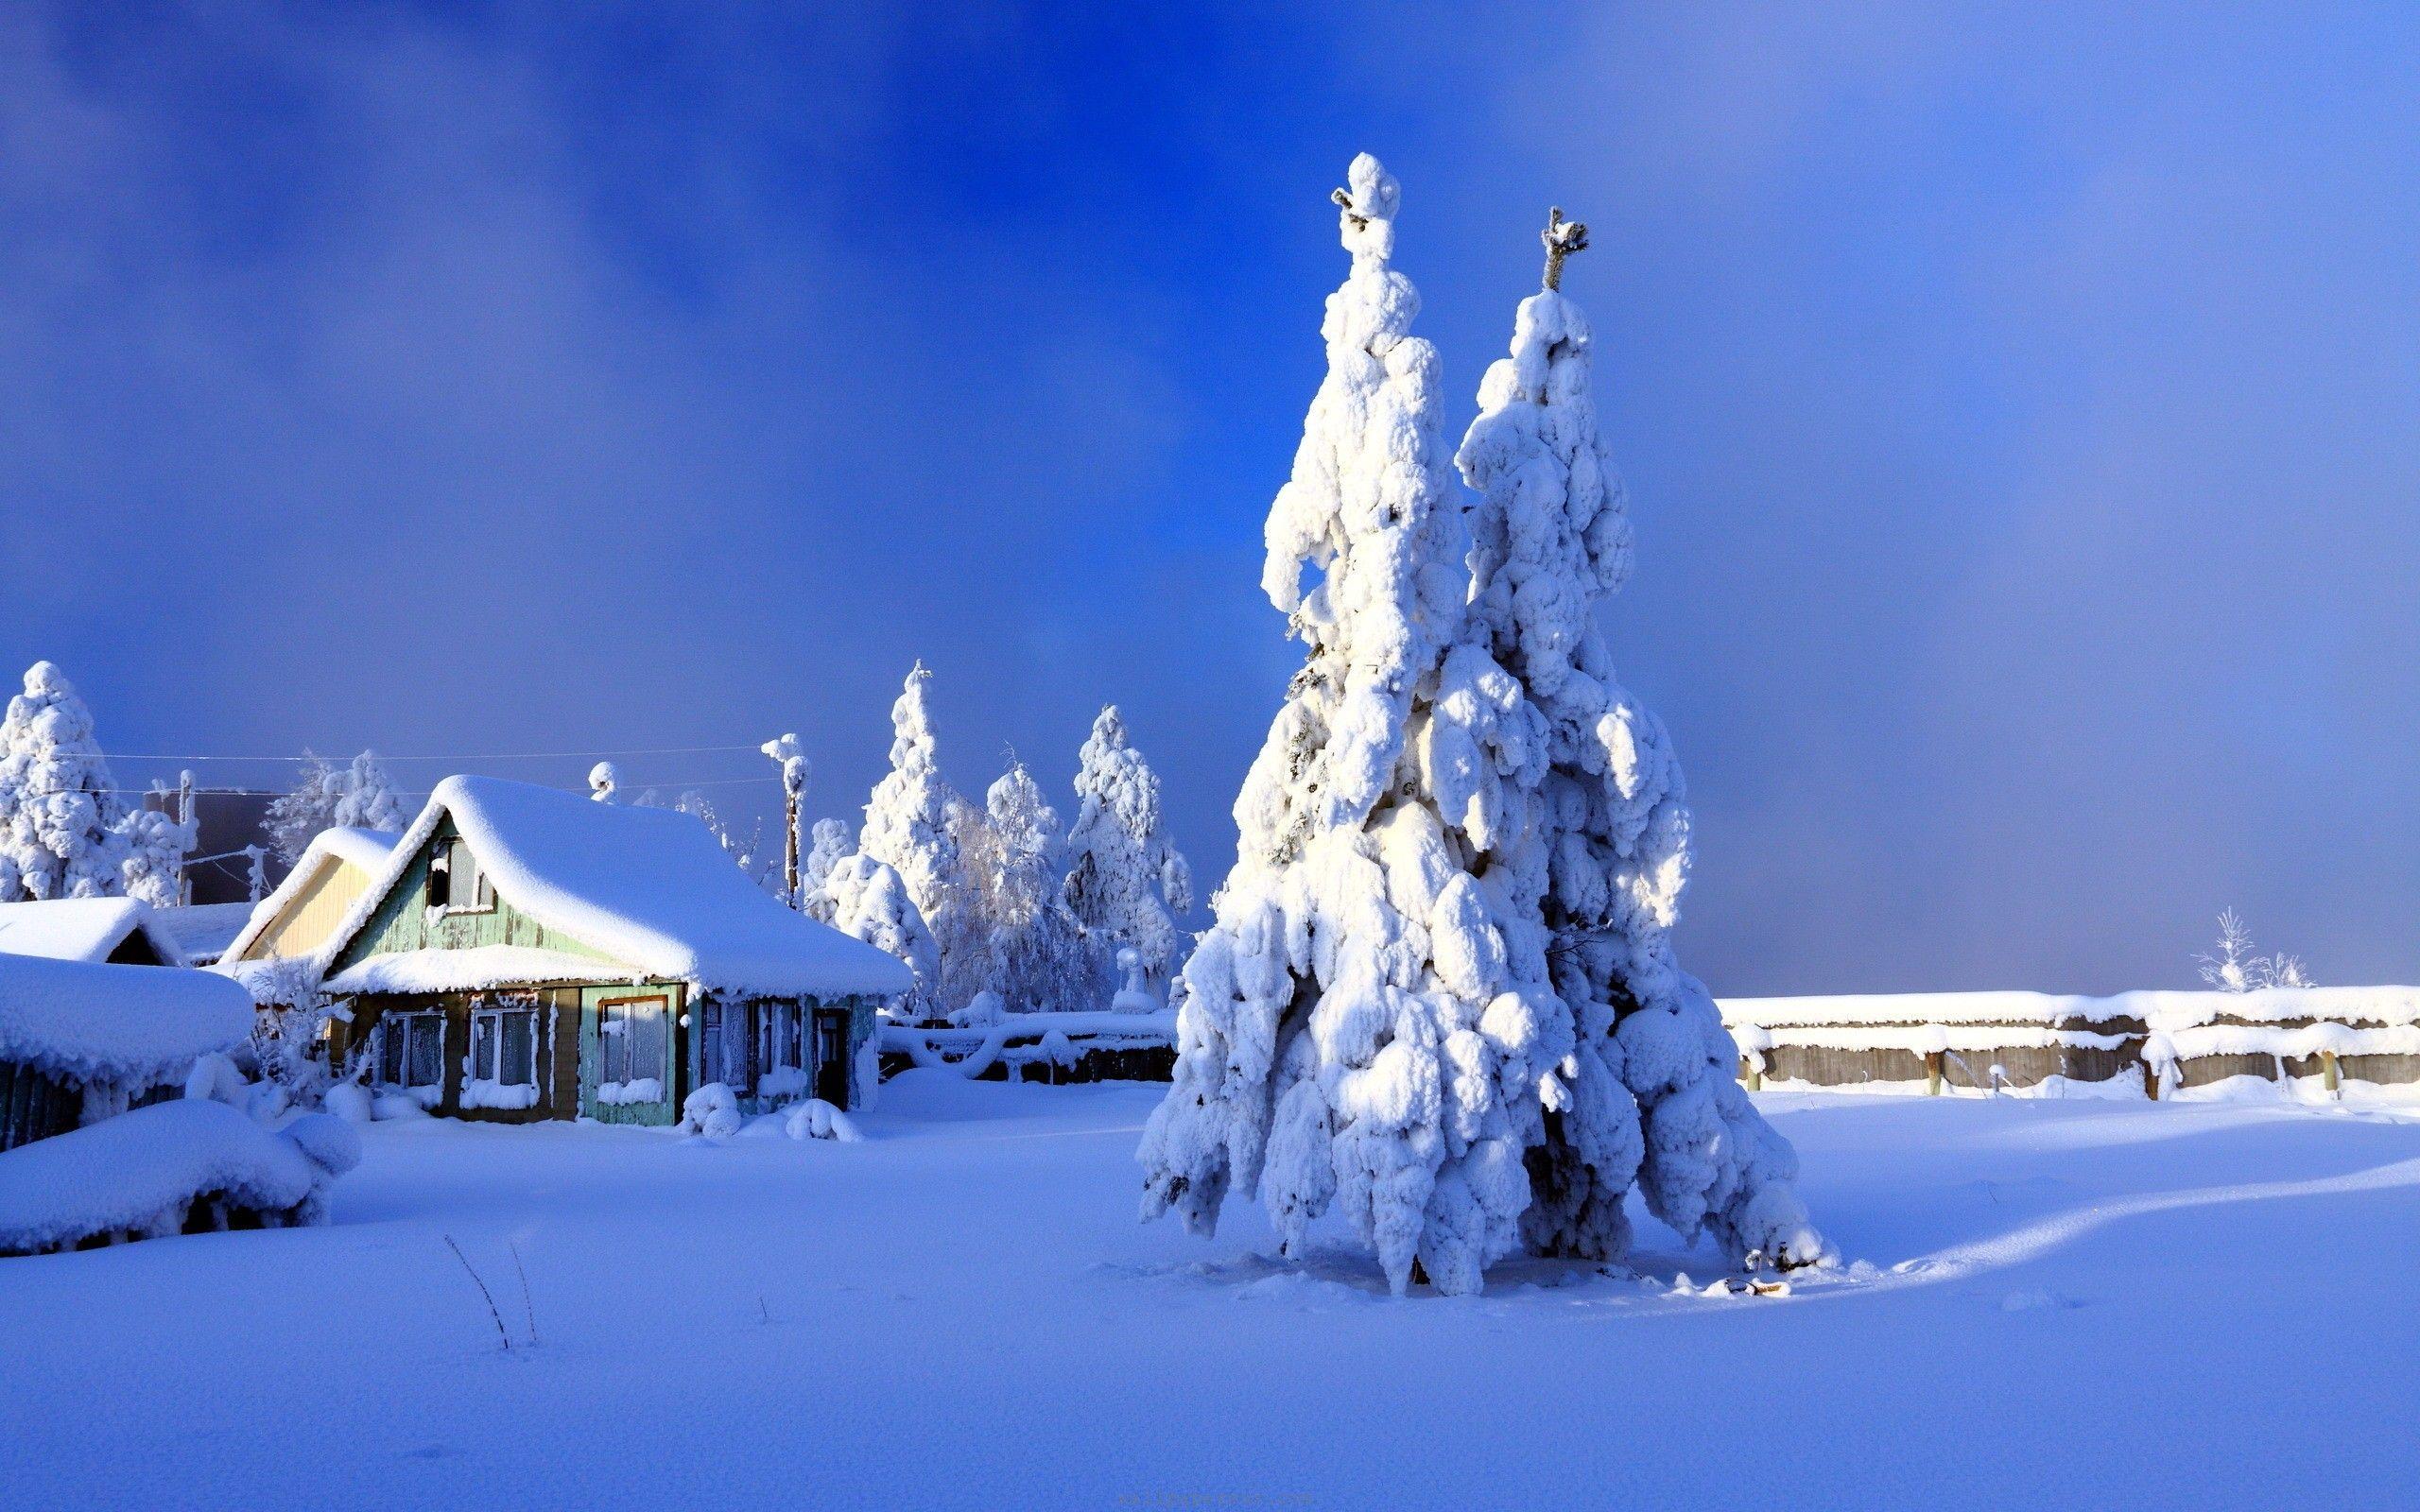 Amazing Snowfall 4K Ultra HD Wallpaper Background Image